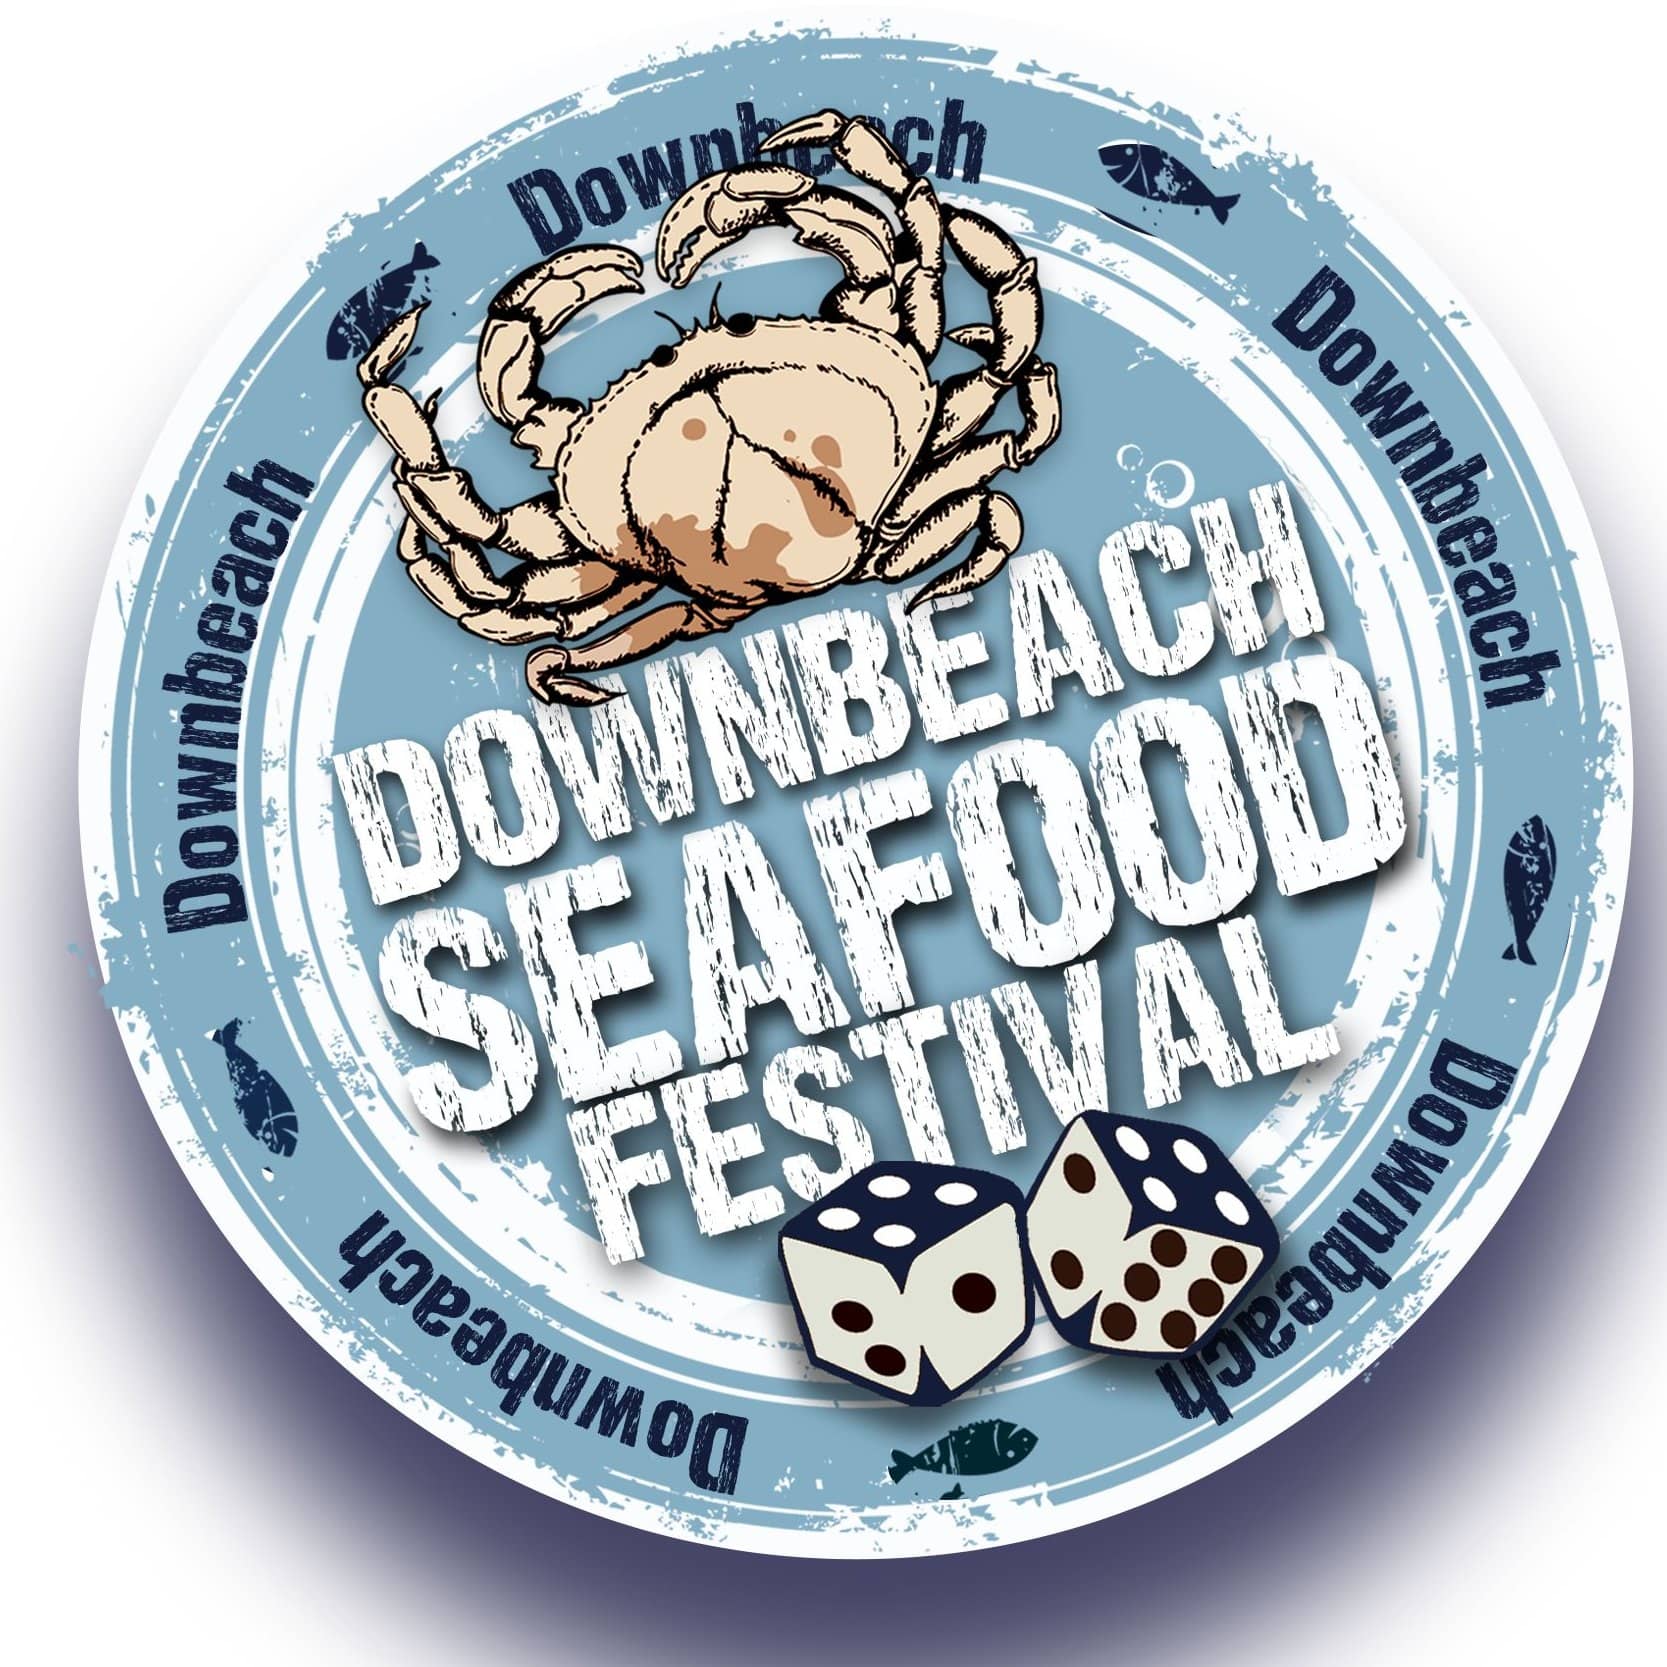 Downbeach Seafood Festival